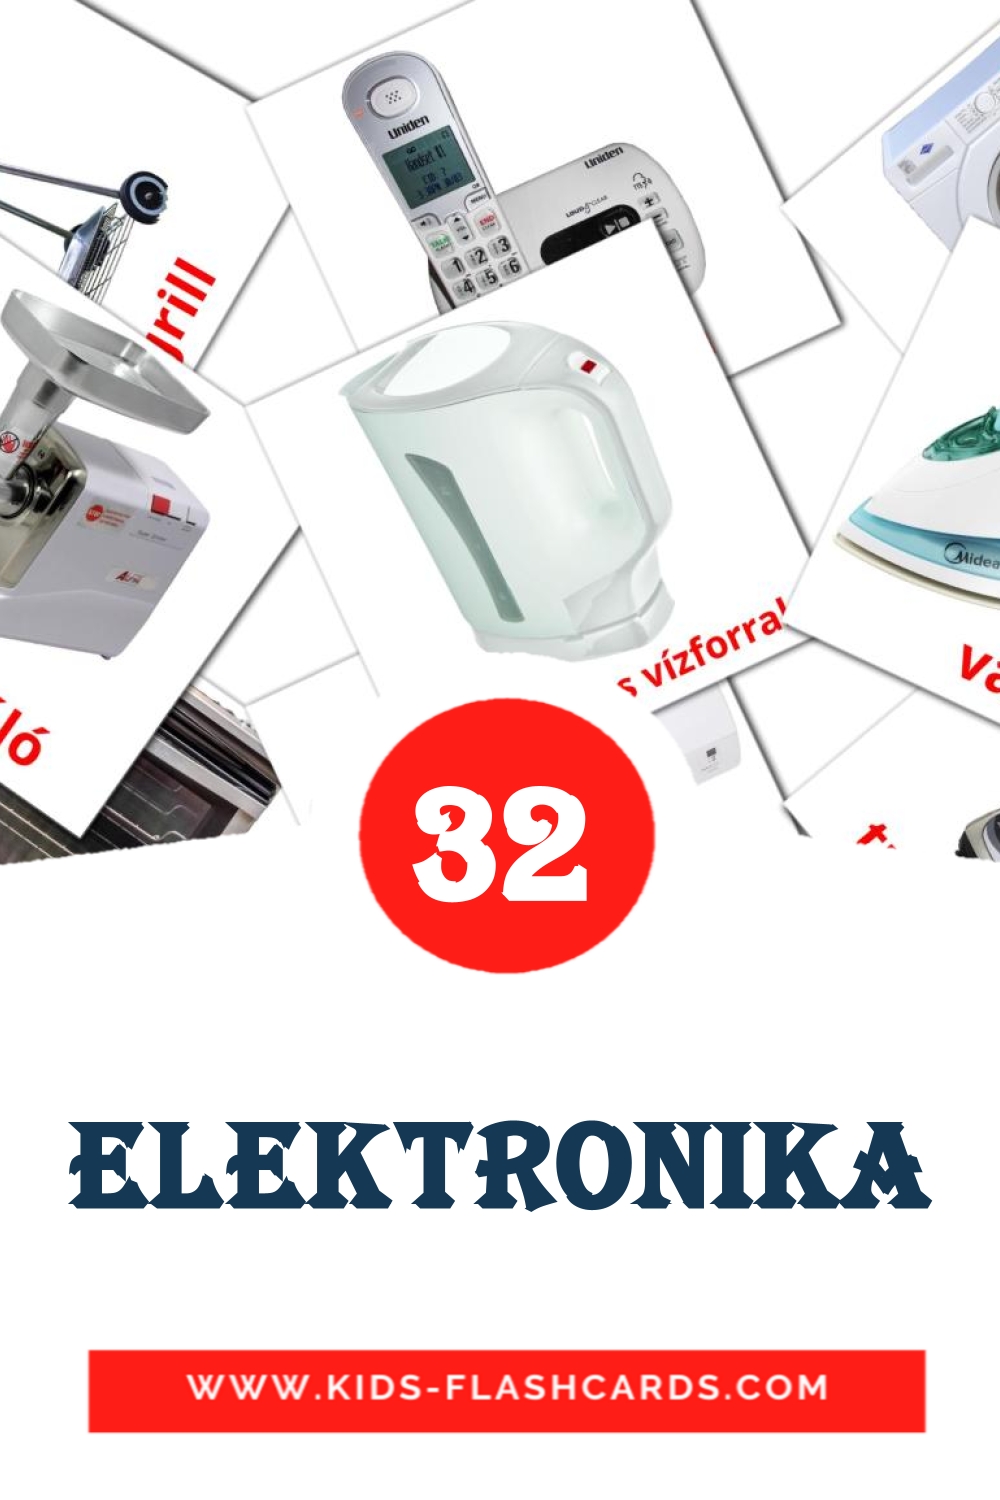 32 carte illustrate di Elektronika per la scuola materna in ungherese